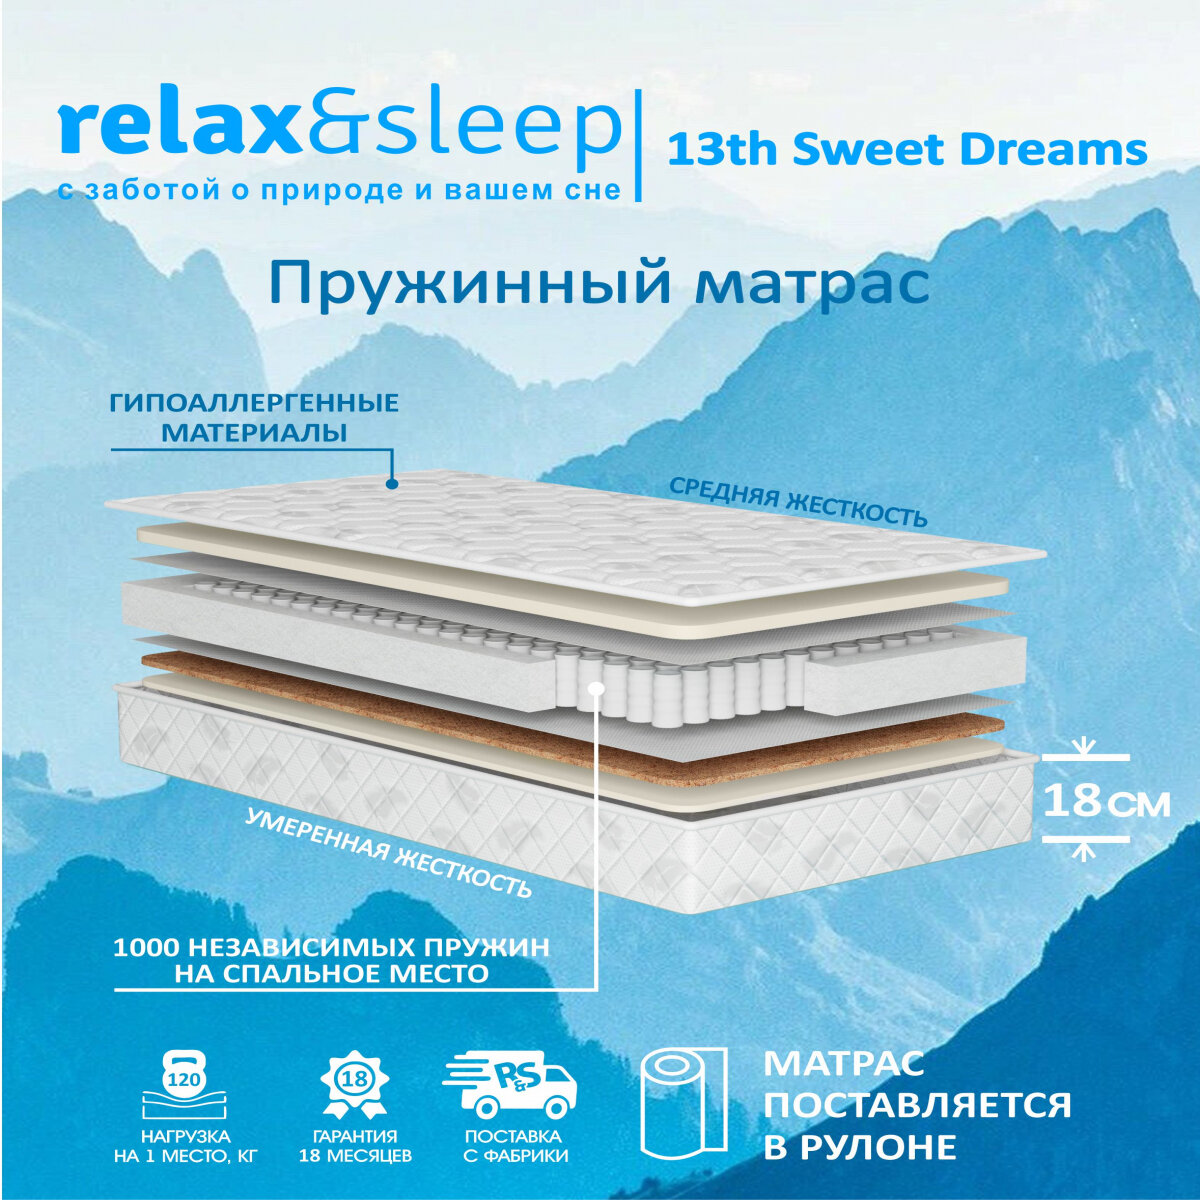 Матрас Relax&Sleep ортопедический пружинный 13th Sweet Dreams (60 / 200)